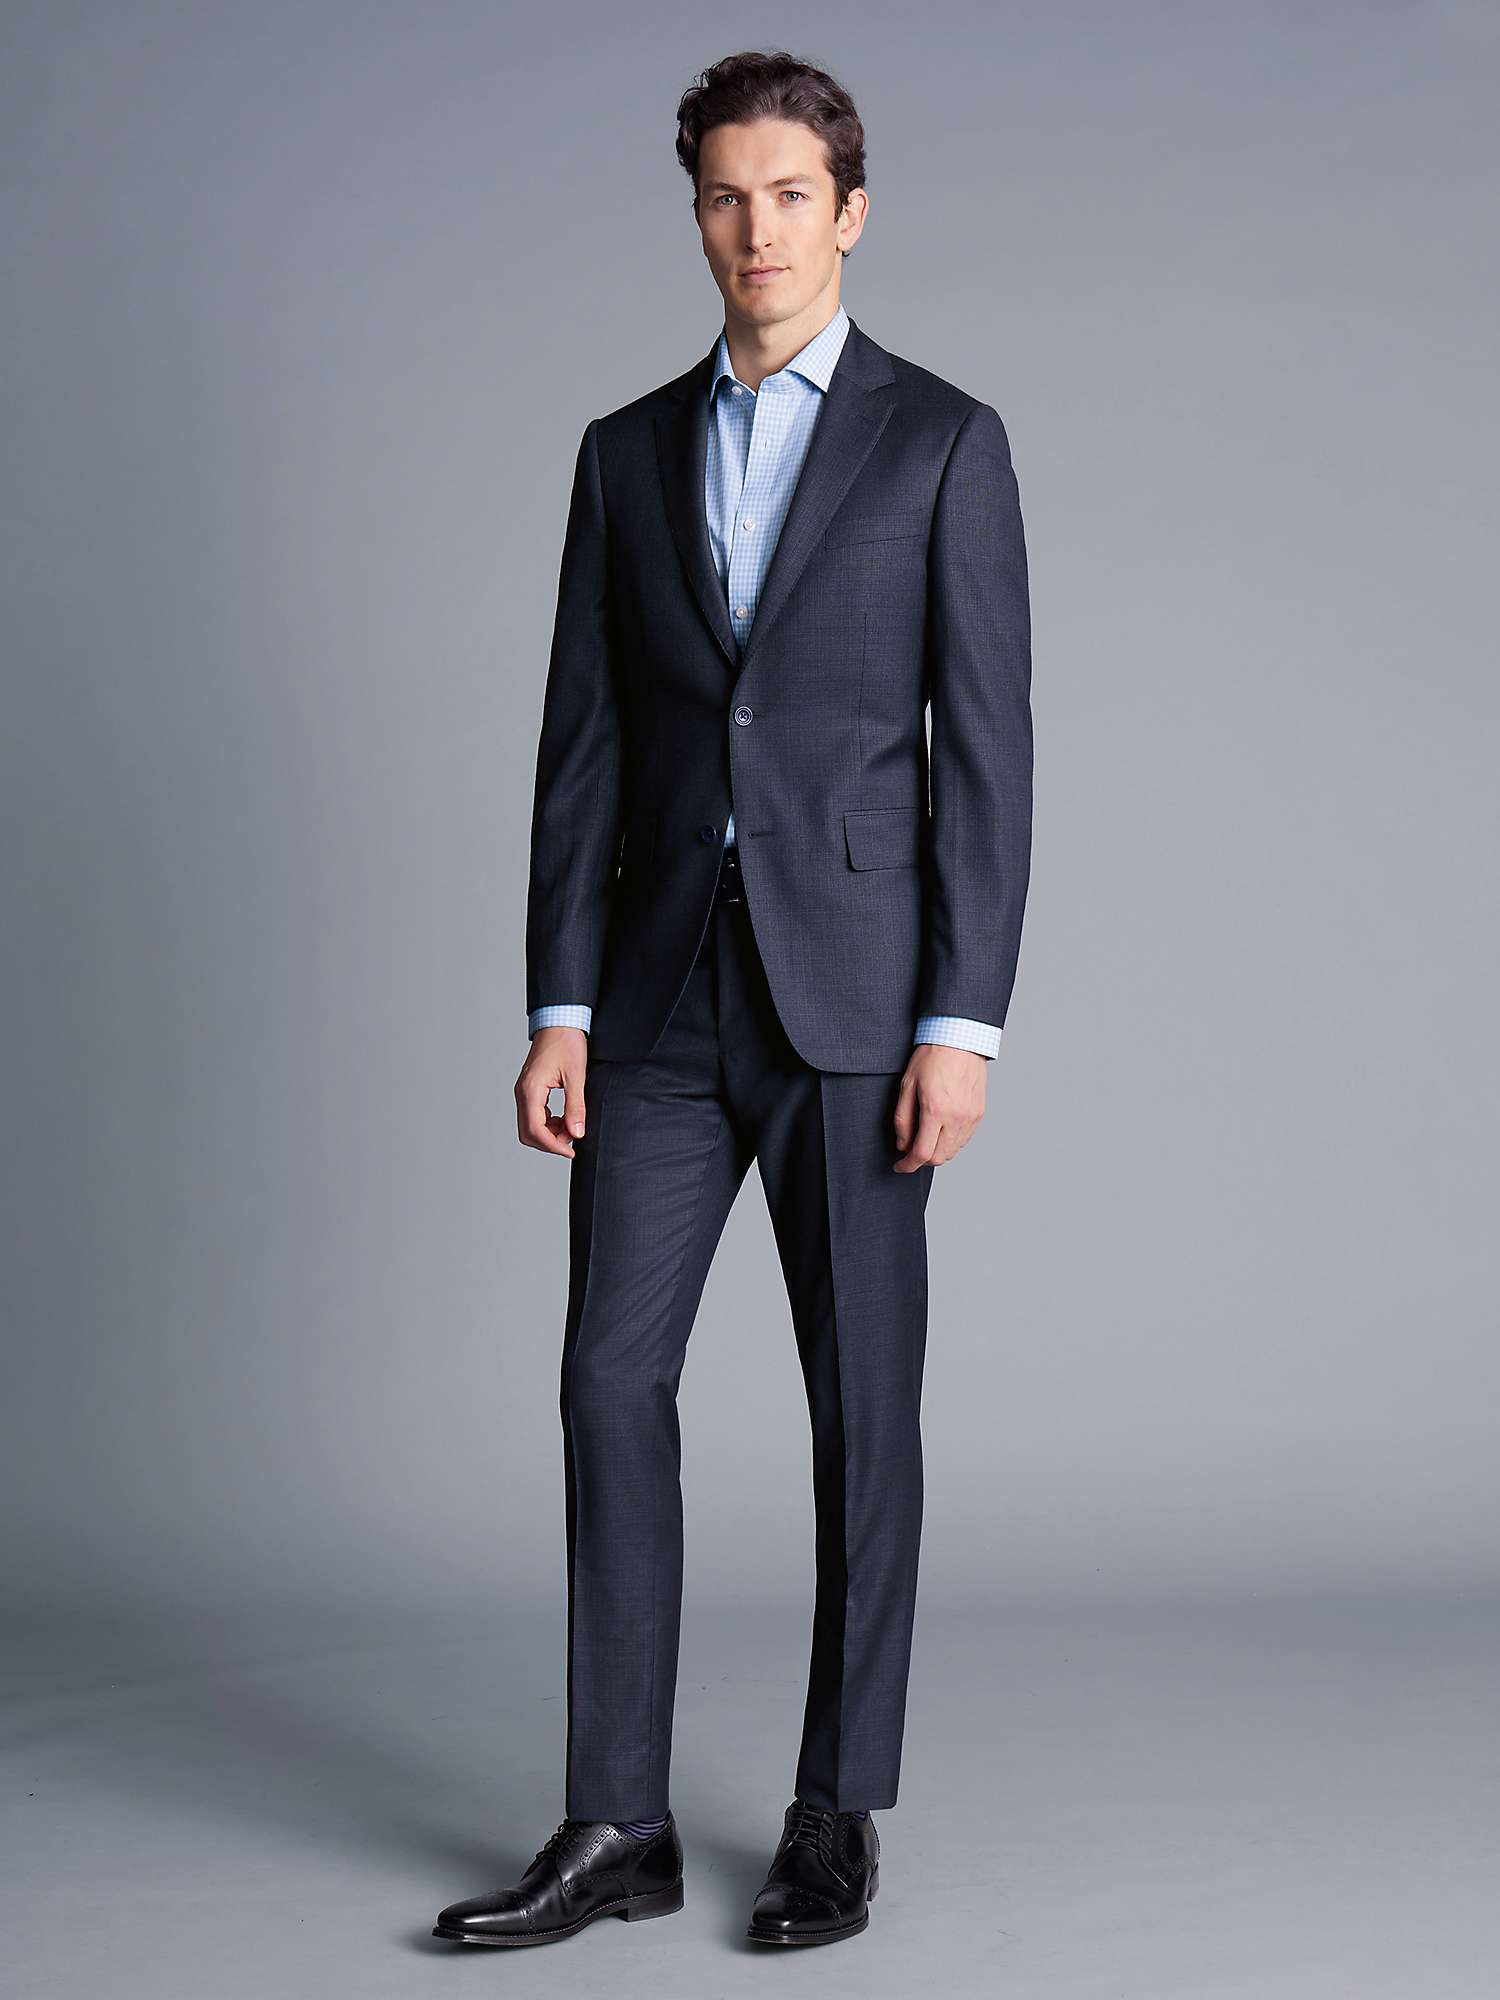 Charles Tyrwhitt Italian Luxury Suit Trousers, Blue at John Lewis ...